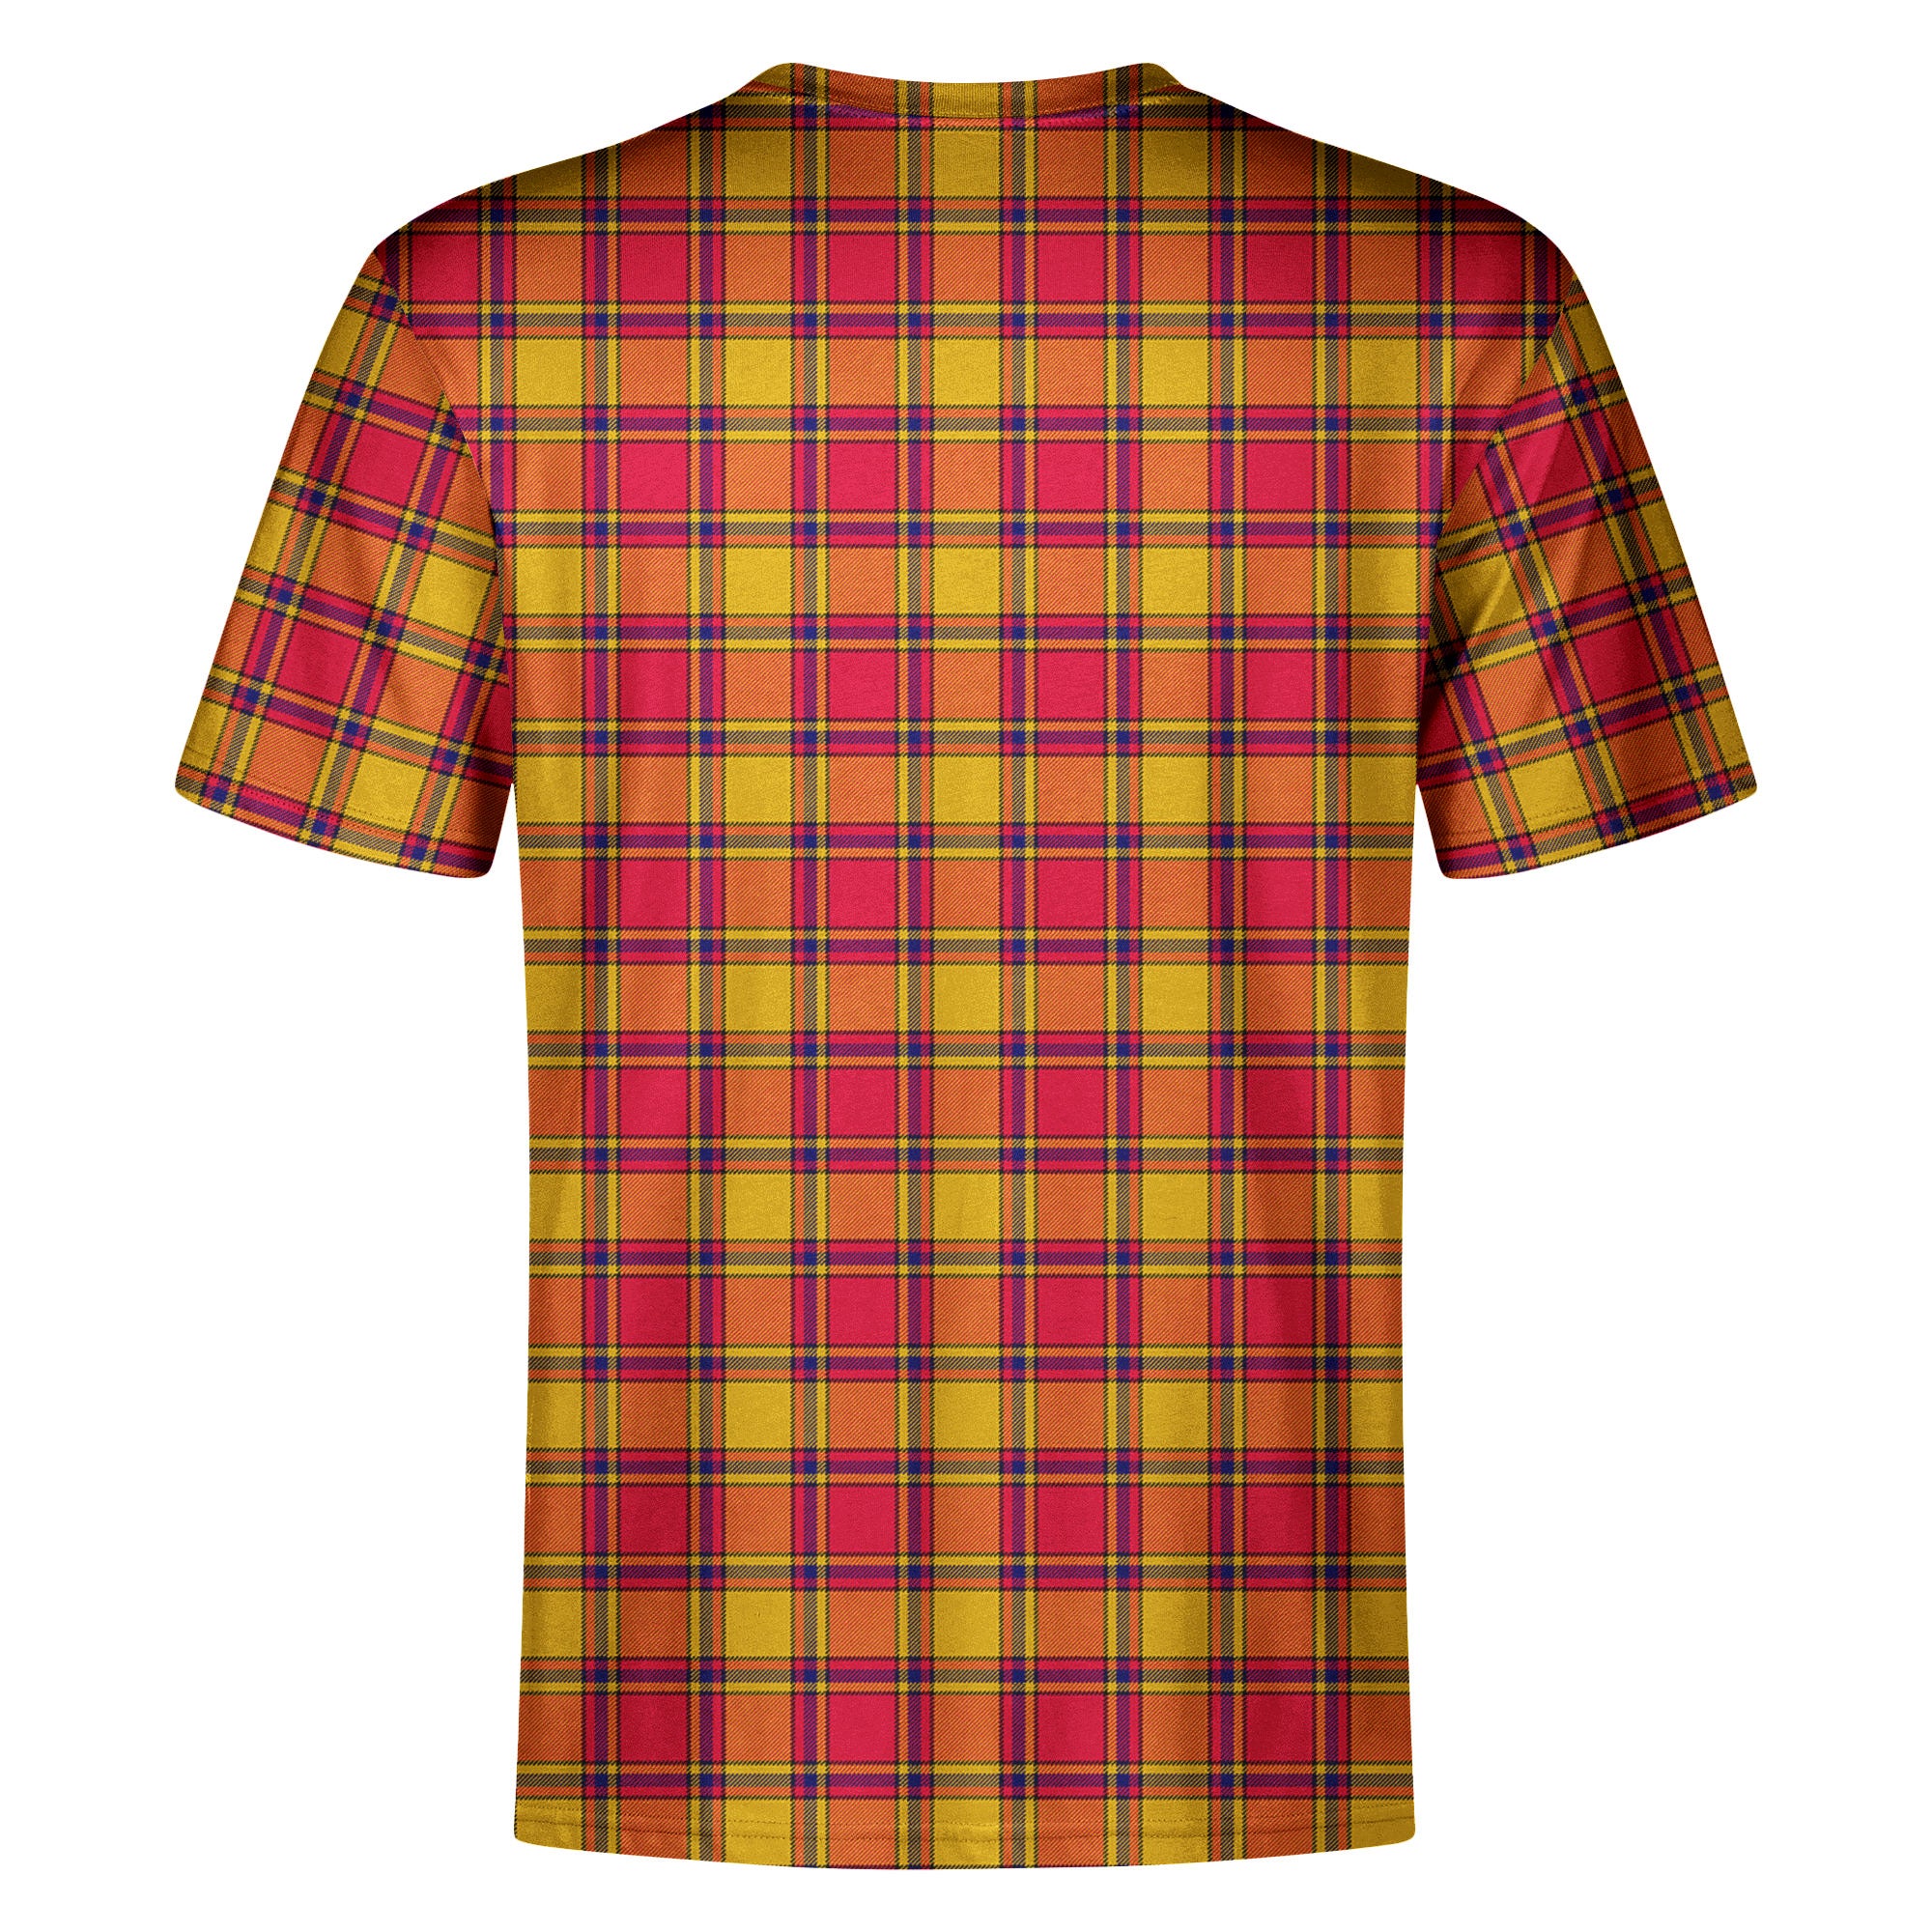 Scrymgeour Tartan Crest T-shirt